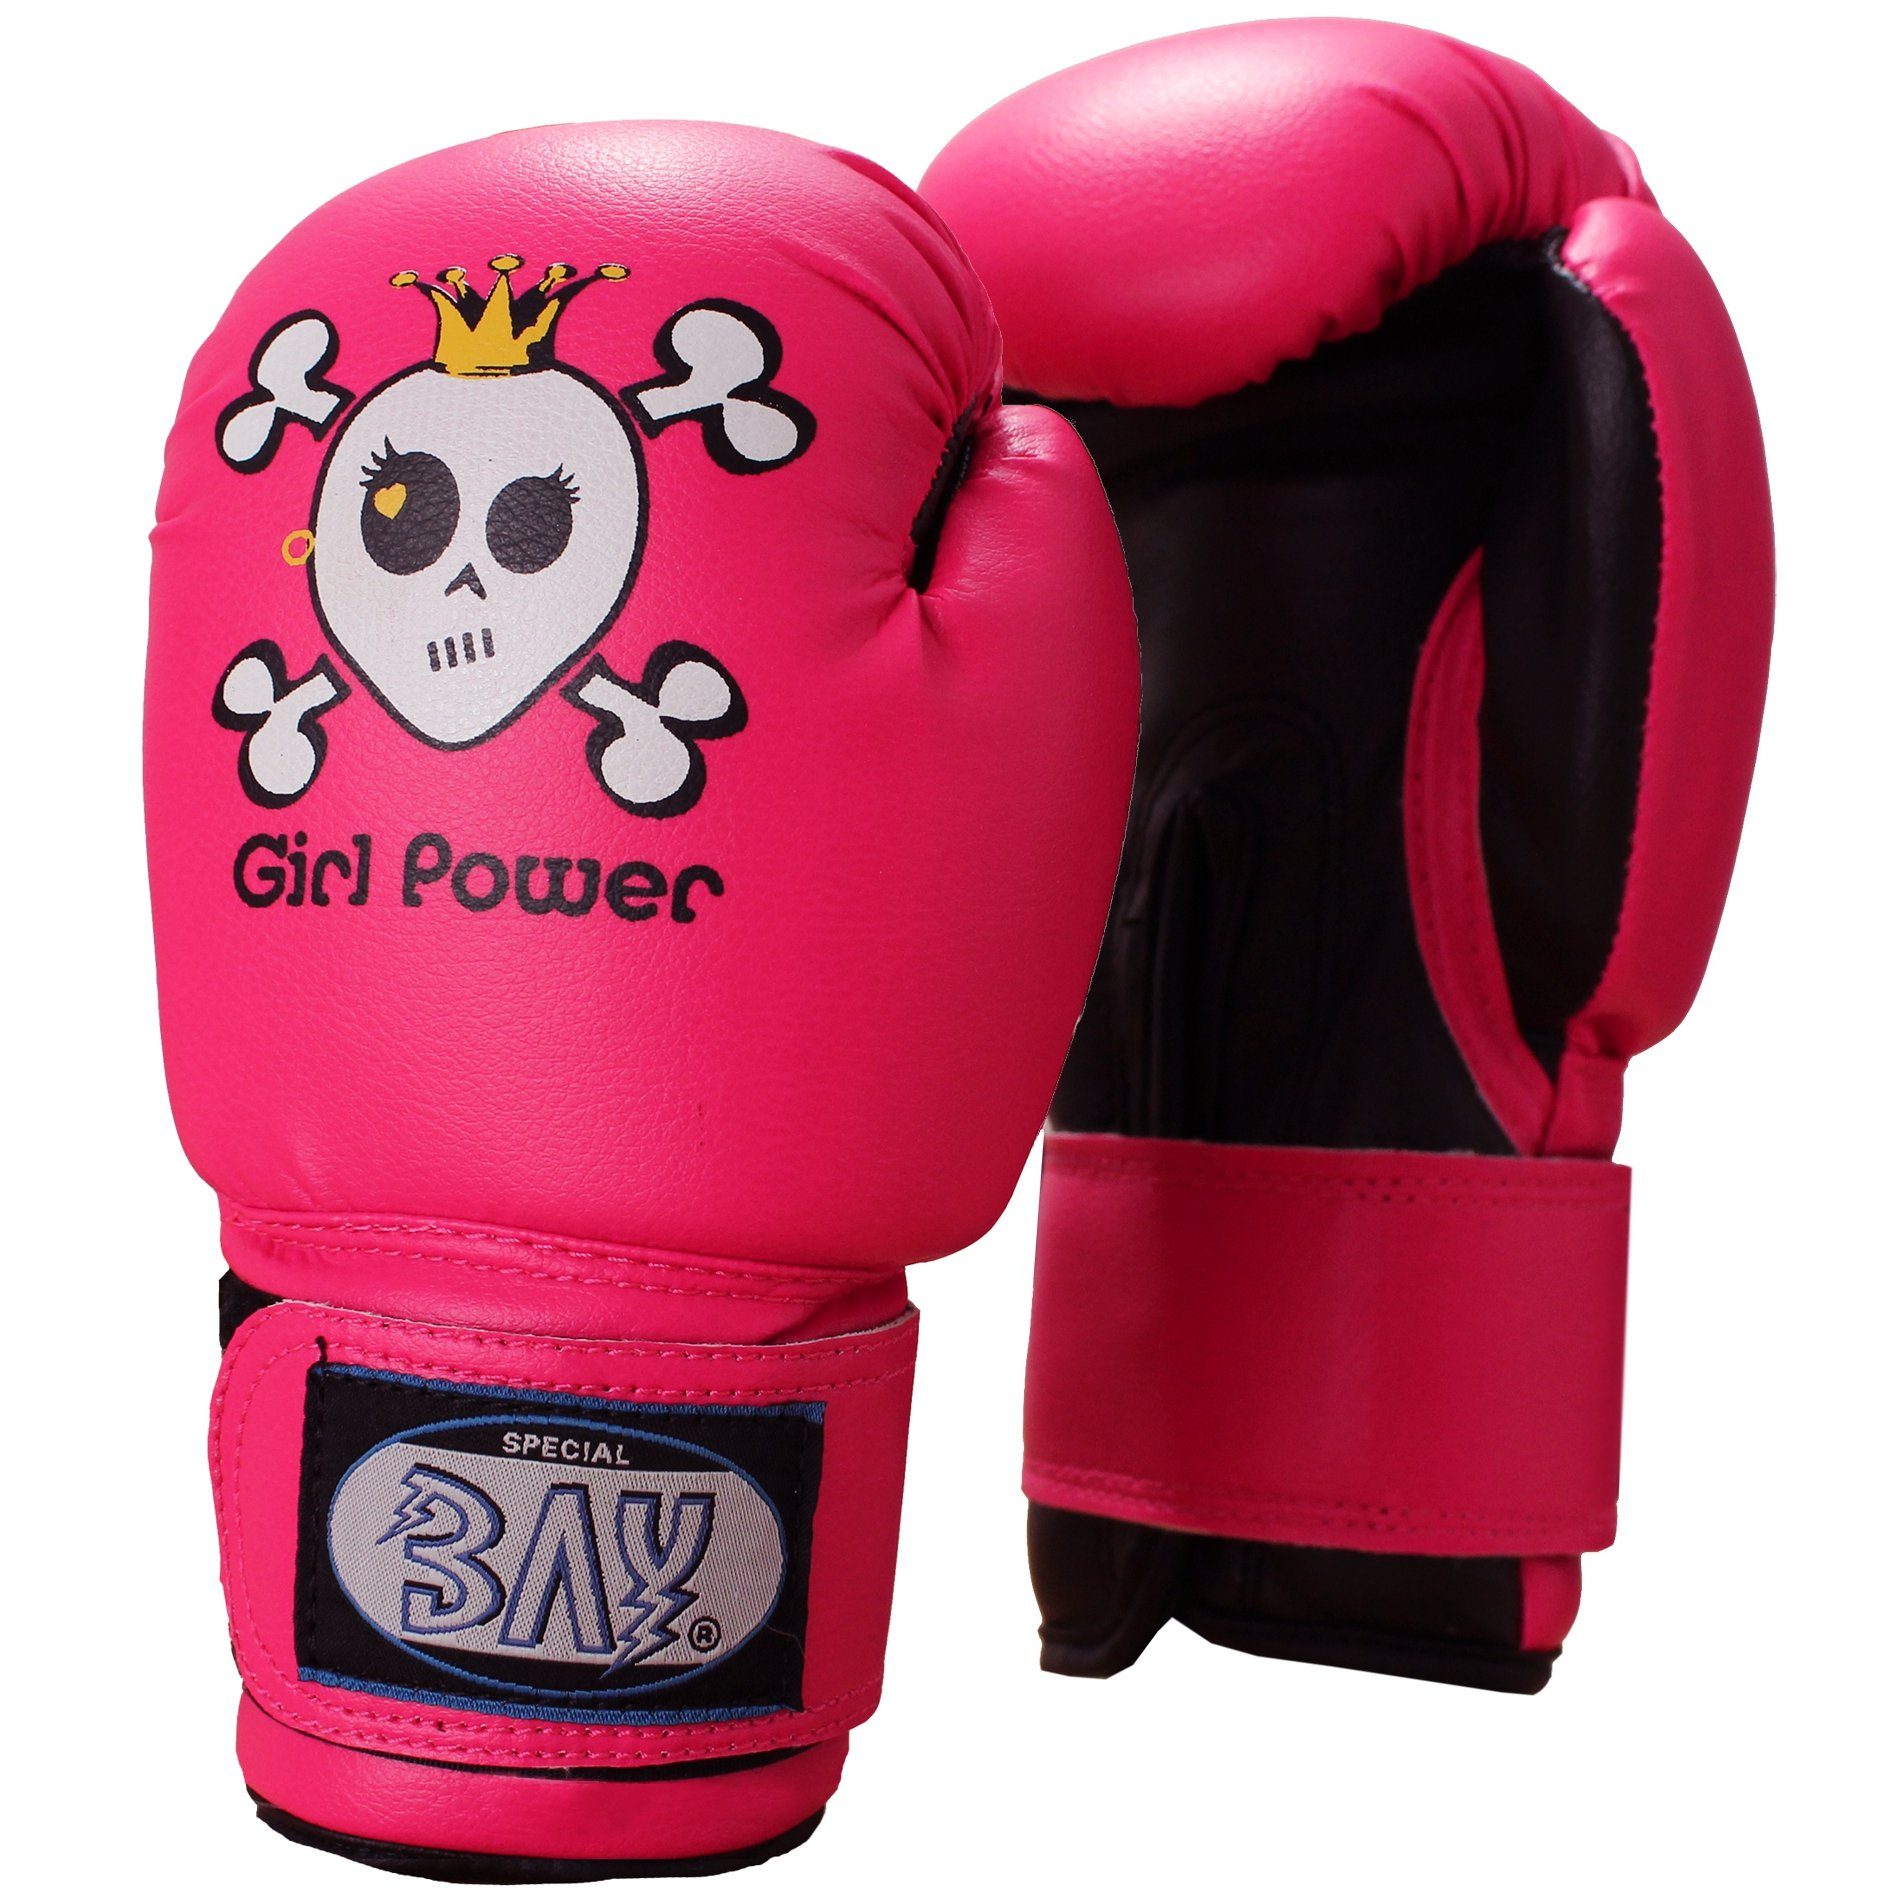 Boxhandschuhe Kids pink Kickboxen Power Boxen Kinderboxhandschuhe BAY-Sports Girl